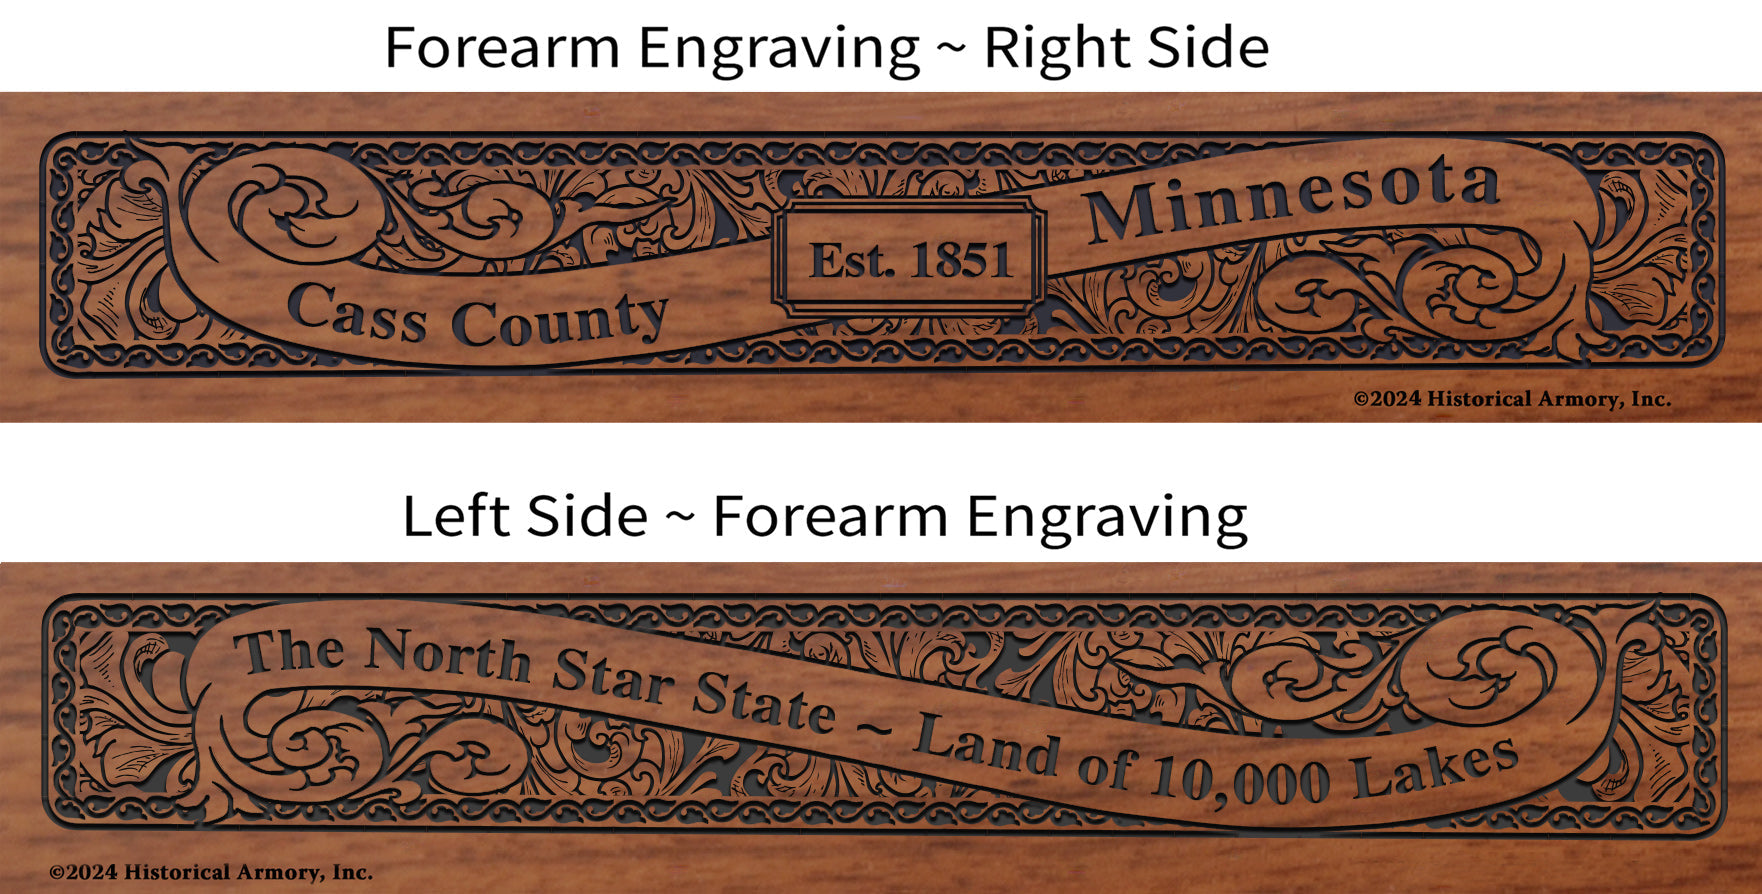 Cass County Minnesota Engraved Rifle Forearm